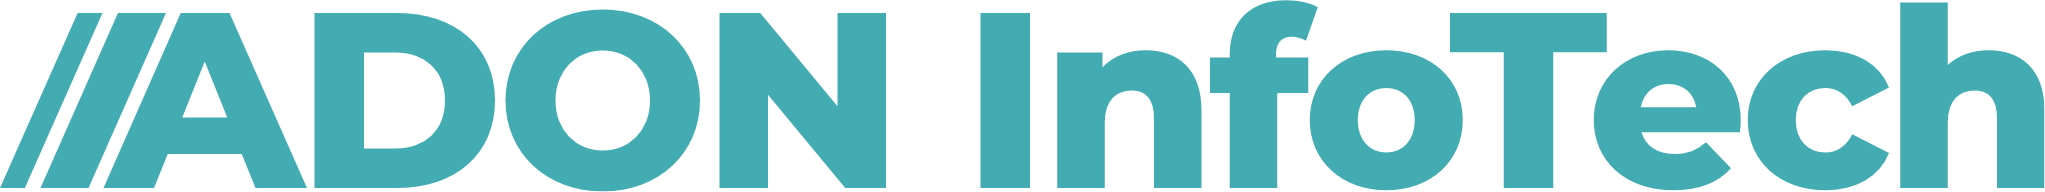 Company logo for ADON InfoTech AB